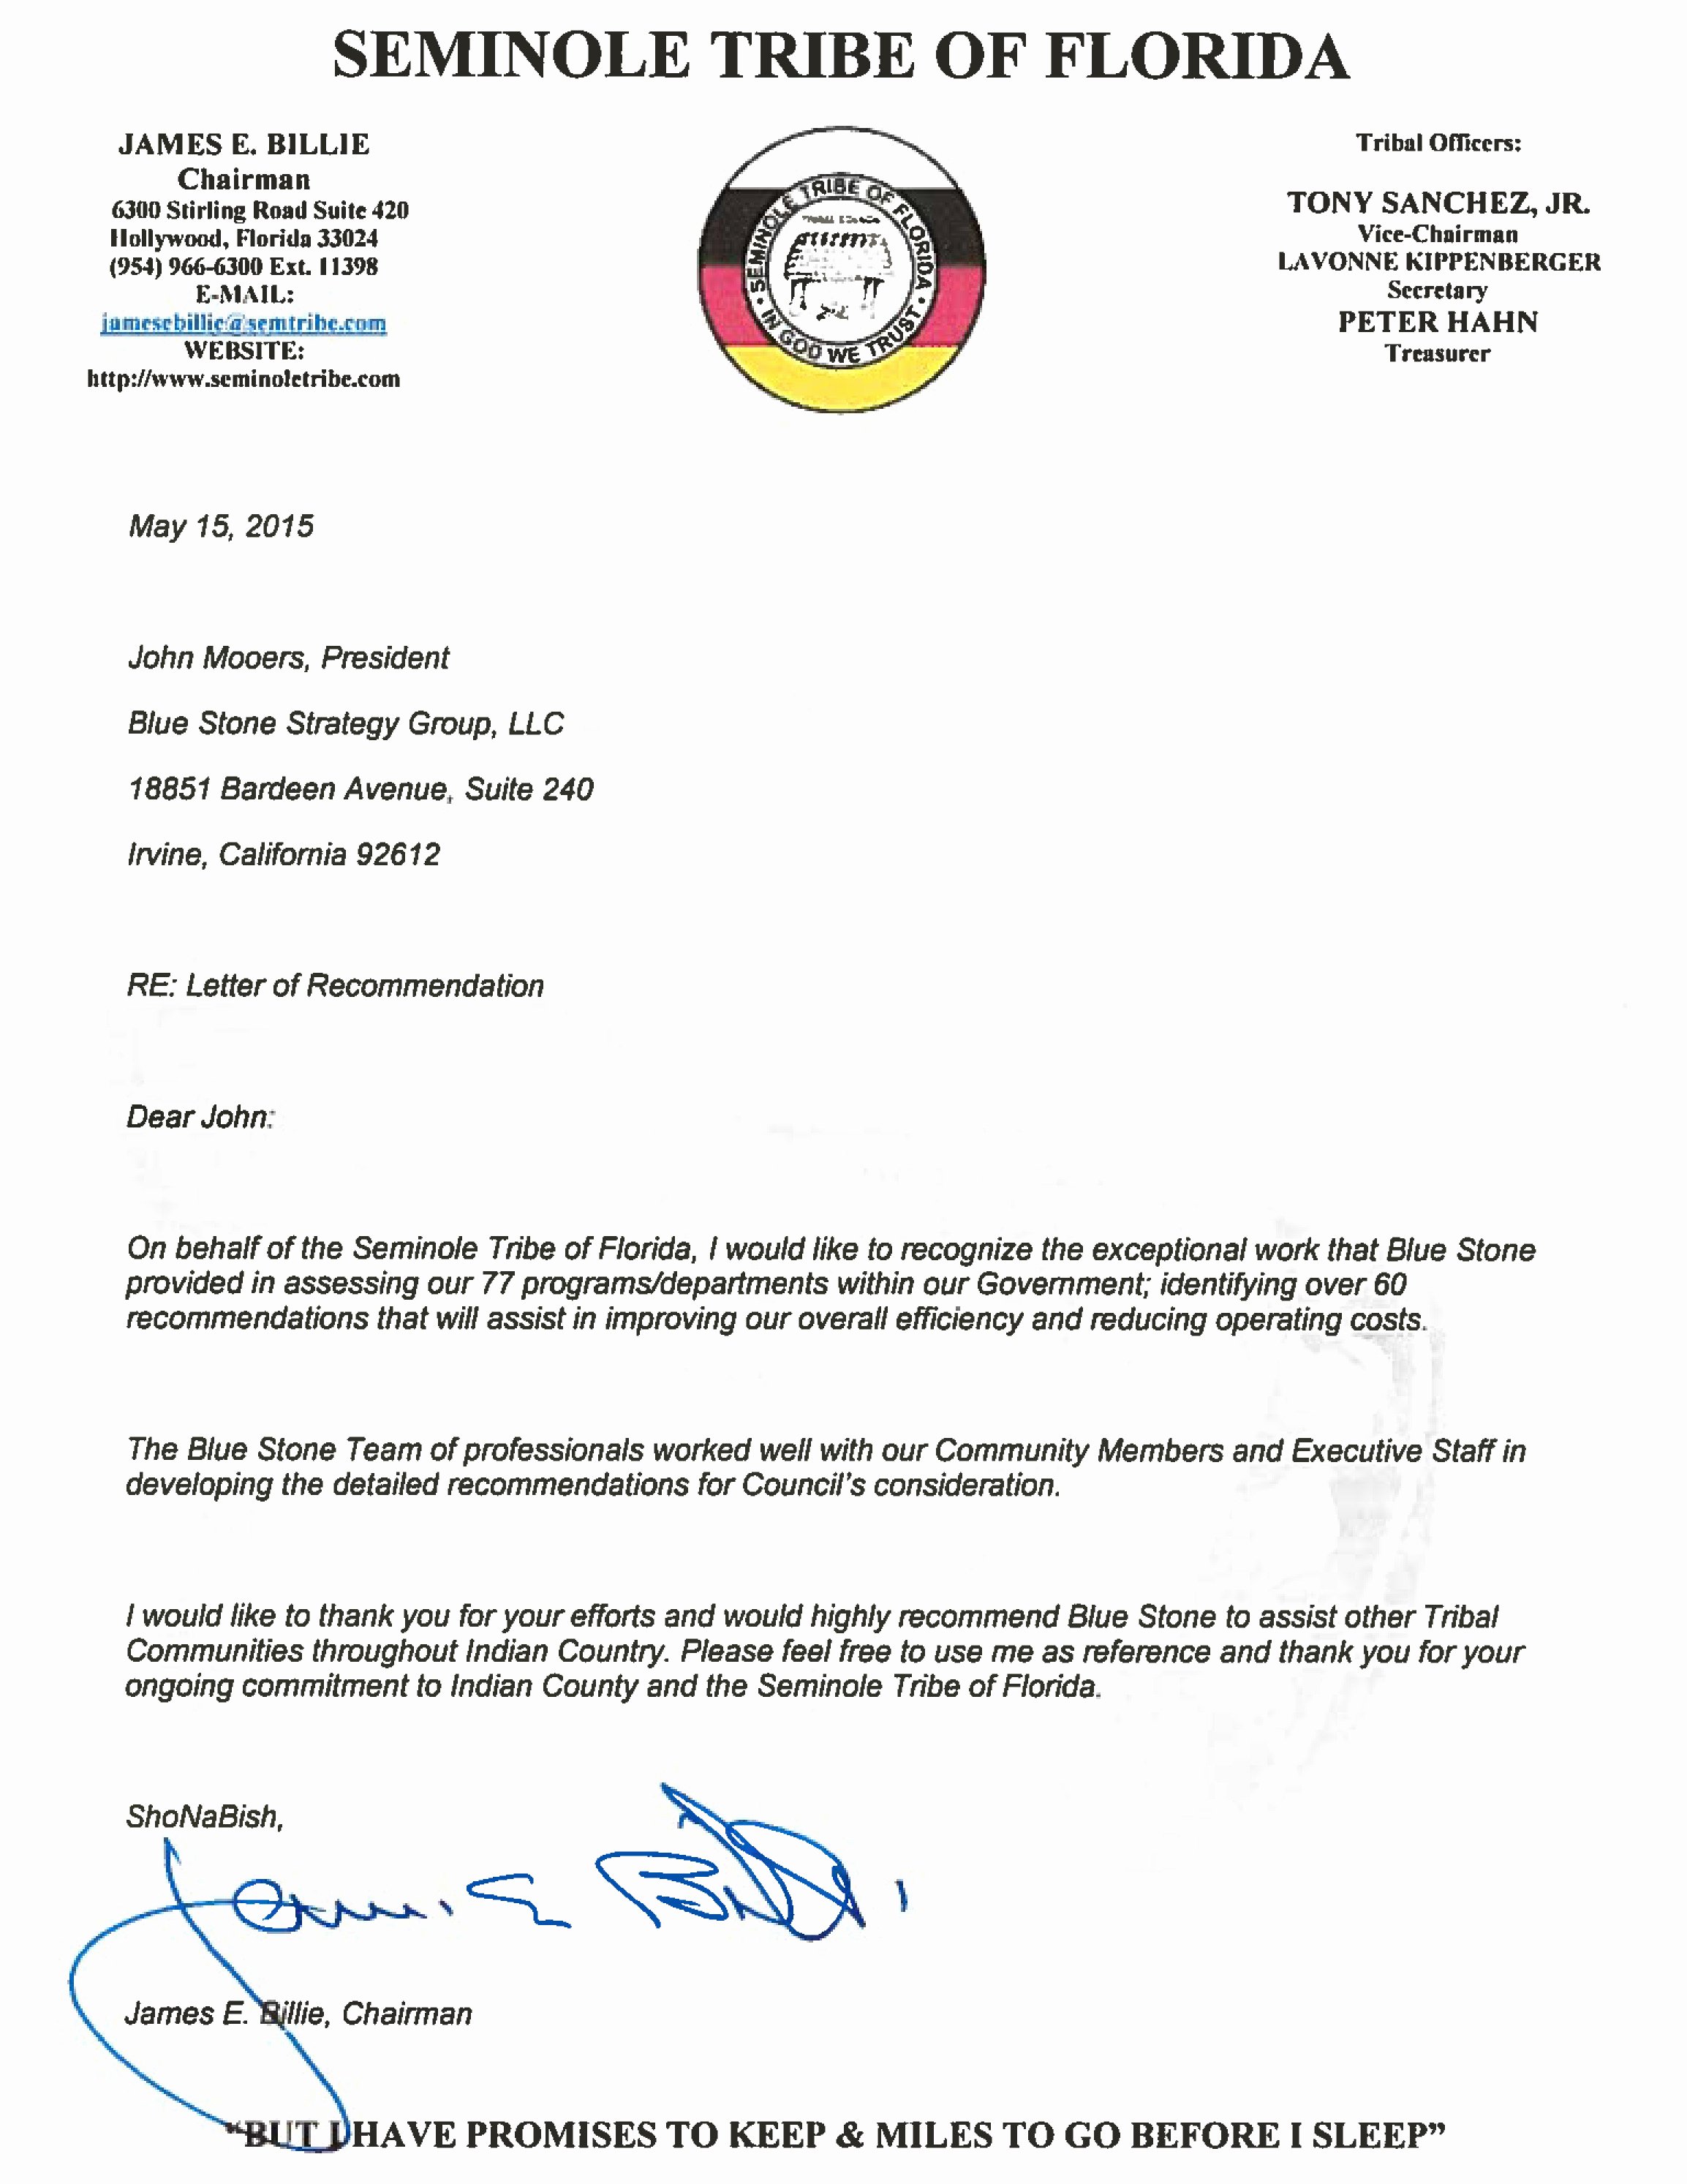 John Nash Recommendation Letter Fresh Bssg Seminole Letter Of Re Mendation 05 2015 Blue Stone